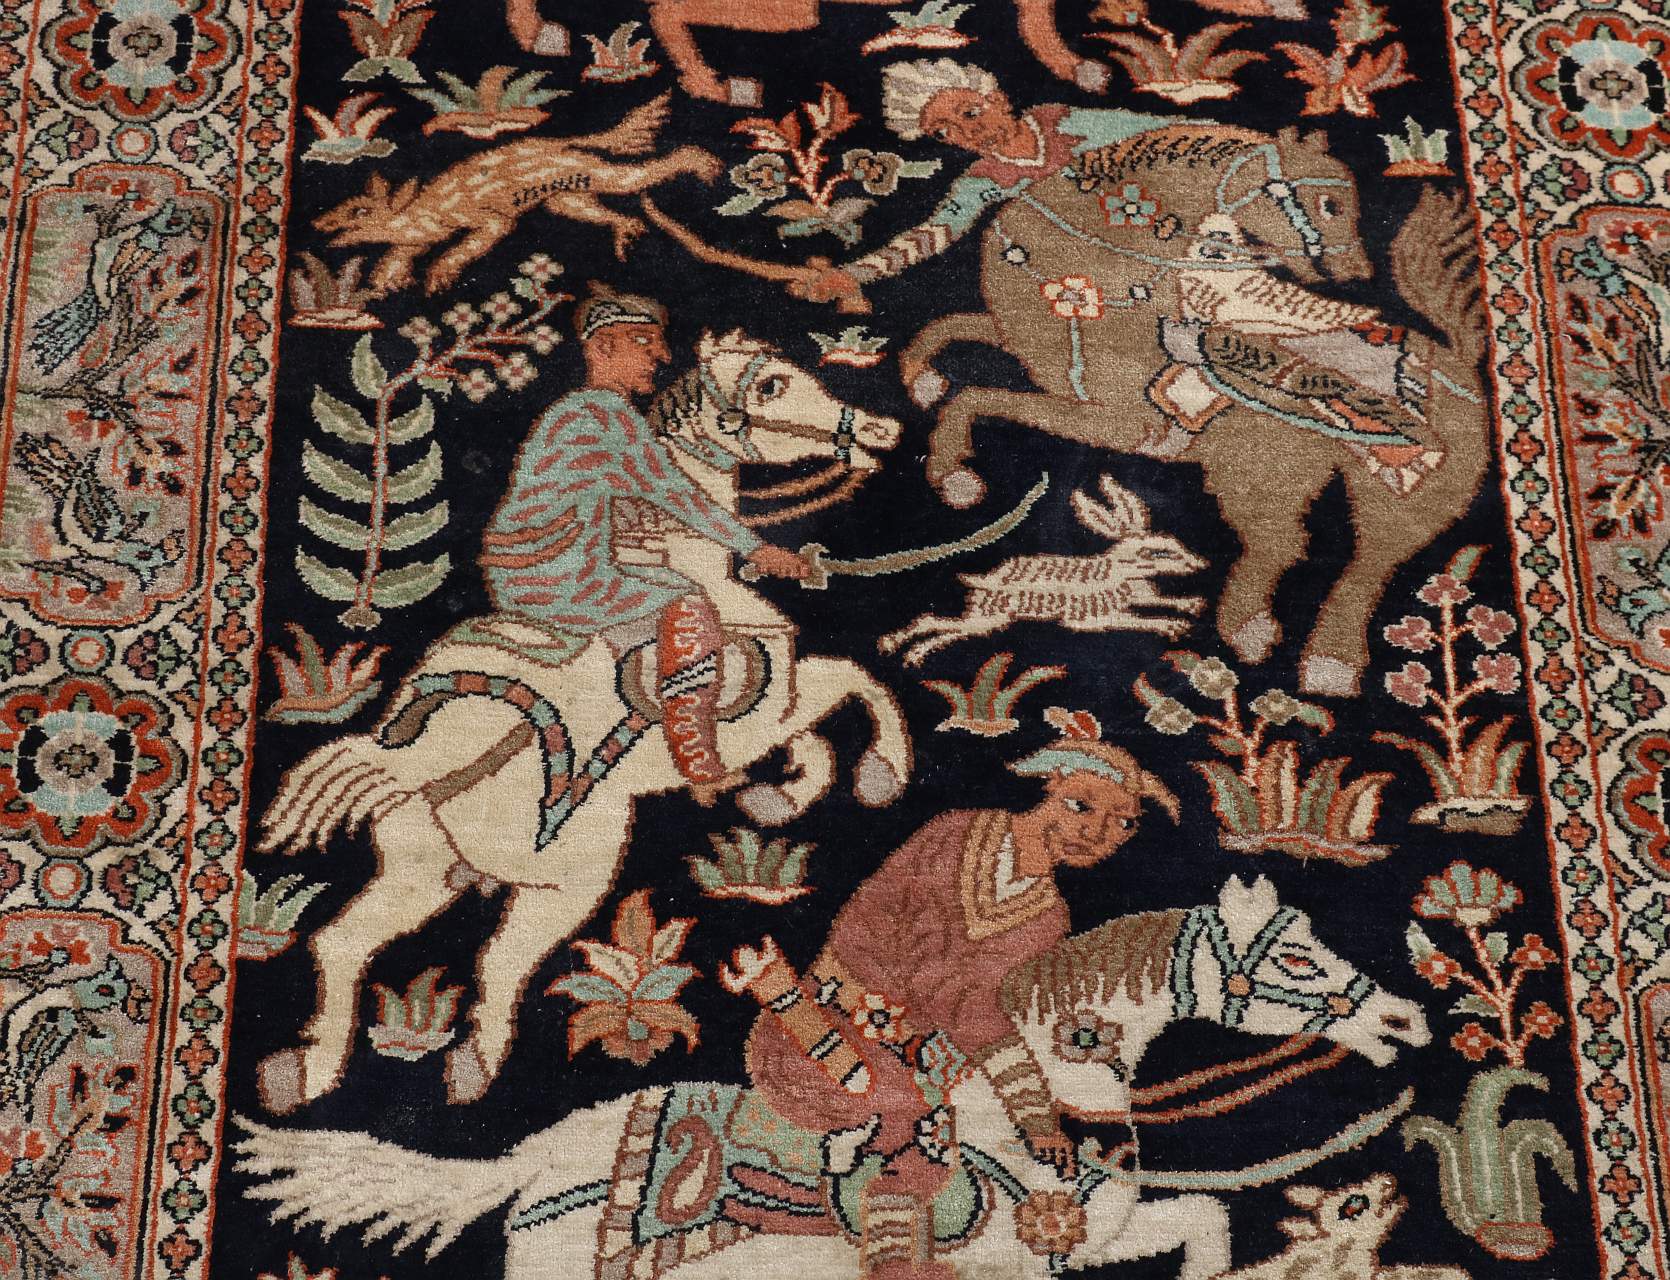 Silk Ghoum/Iran rug, 121 x 78 cm. - Image 2 of 3